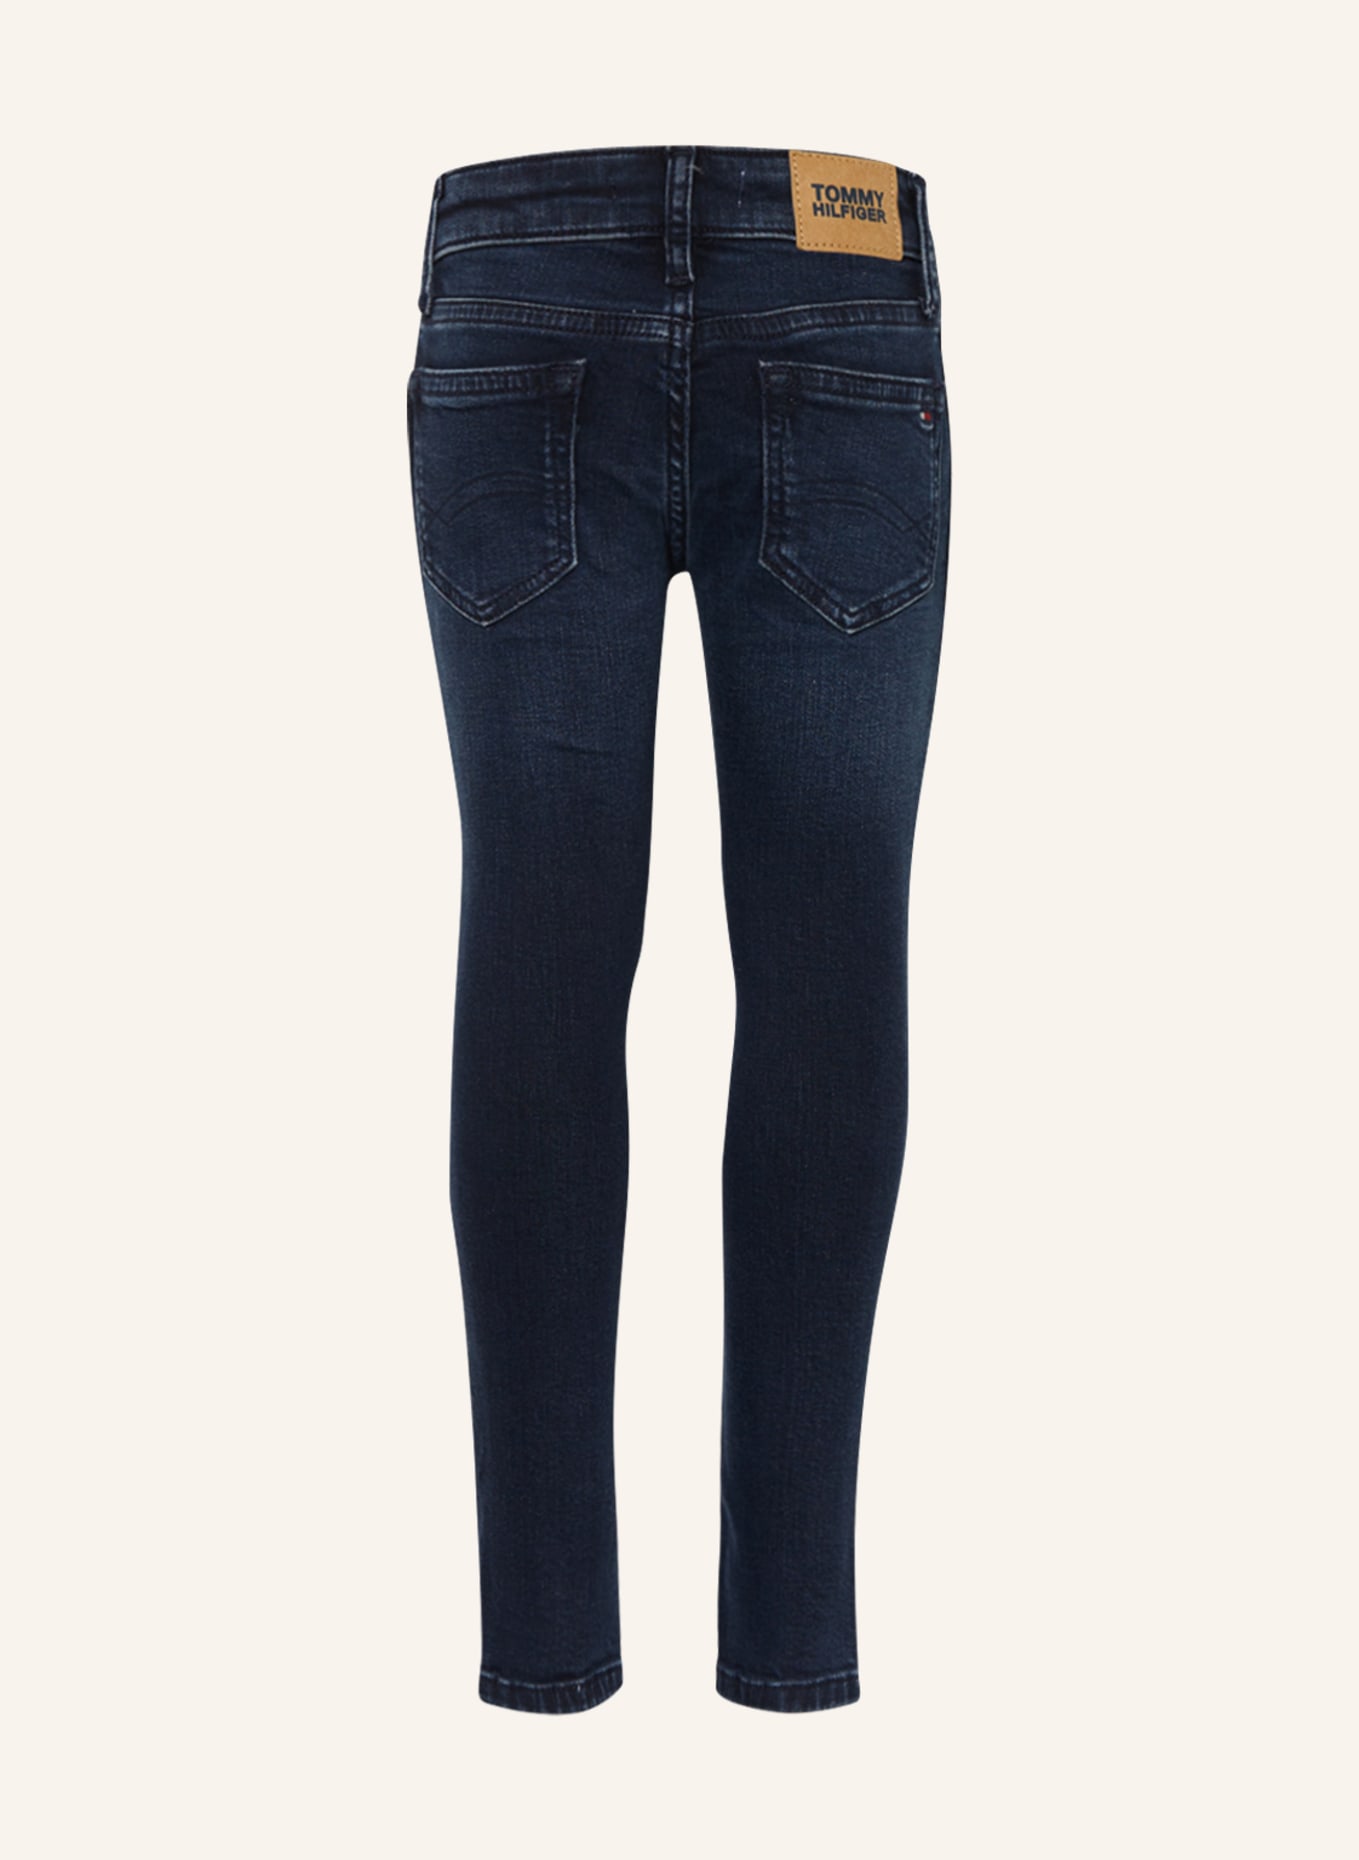 TOMMY HILFIGER Jeans NORA Skinny Fit, Farbe: 1BK Blueblack (Bild 2)